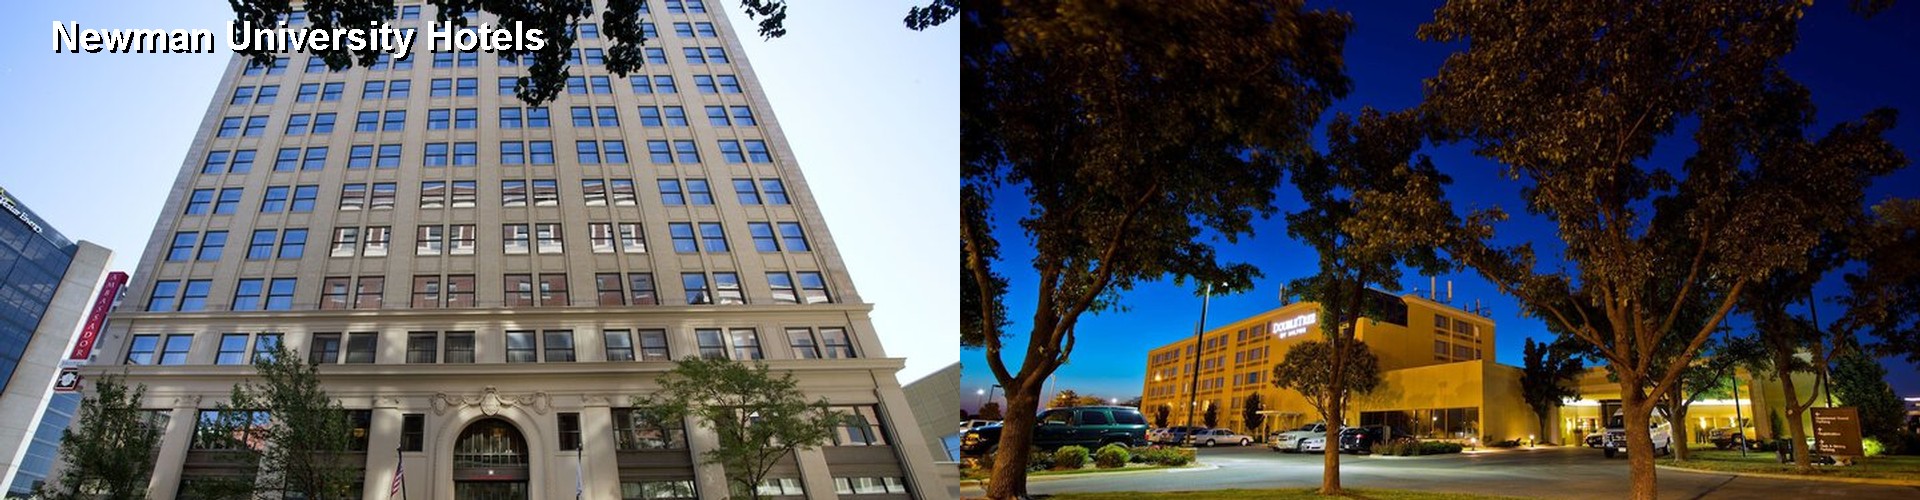 5 Best Hotels near Newman University